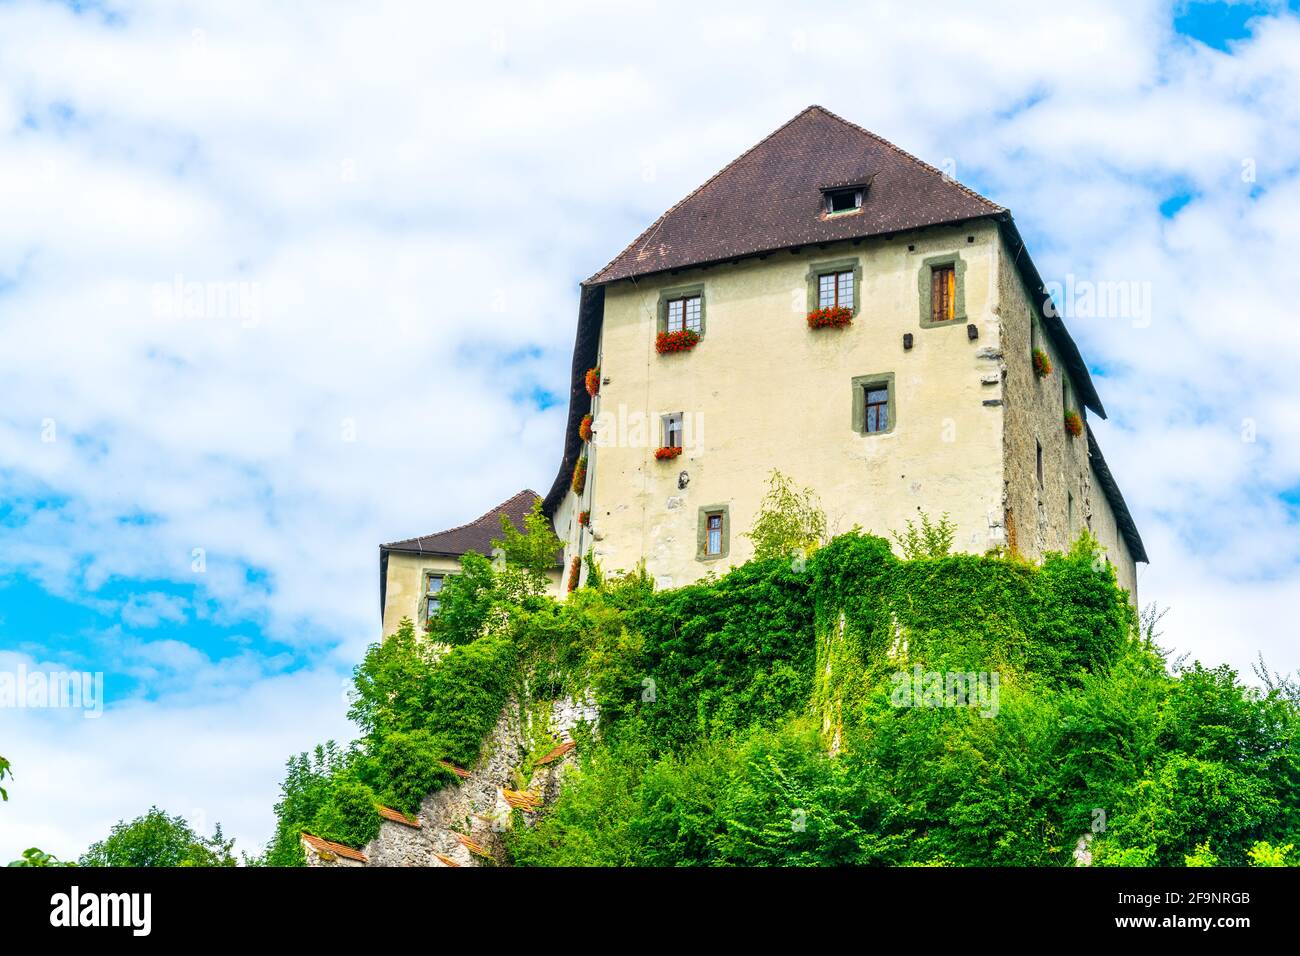 View of the schattenburg castle in Feldkirch, Austria. Stock Photo